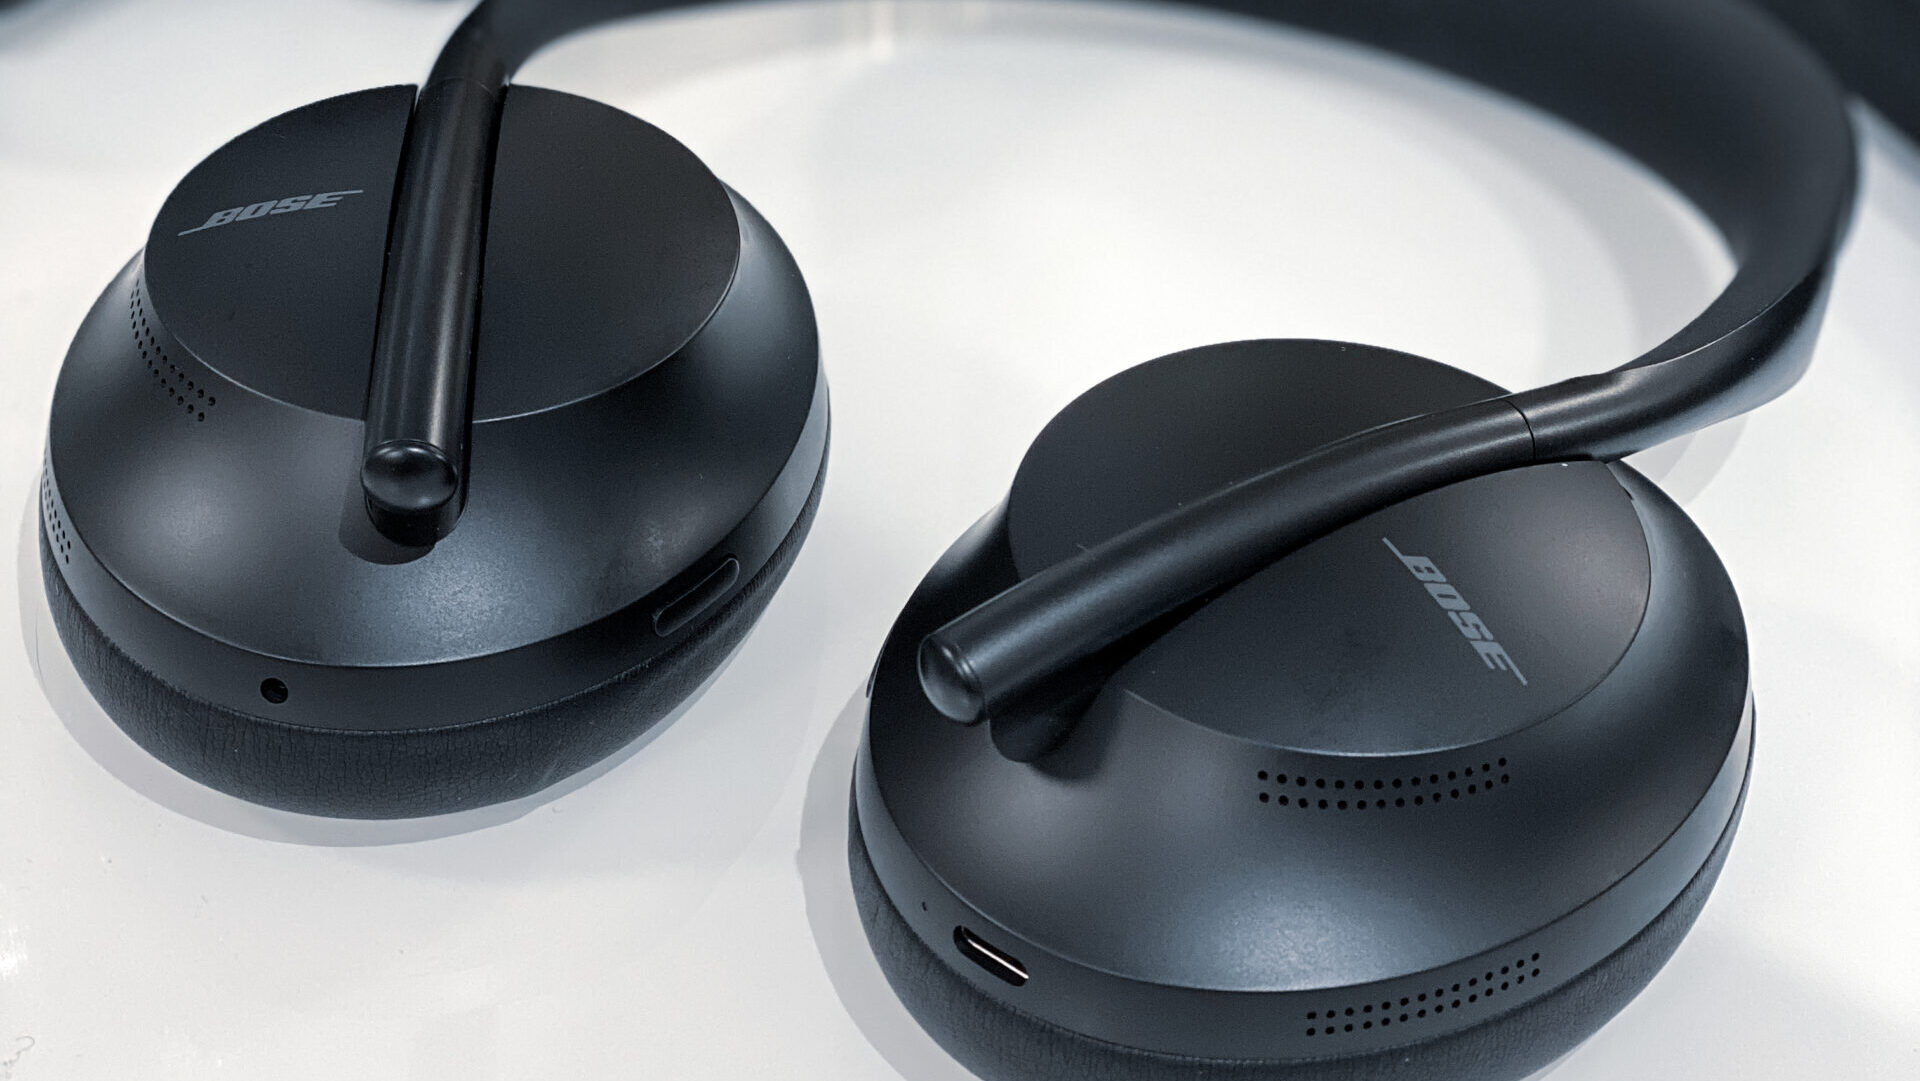 Bose 700 headphones close-up